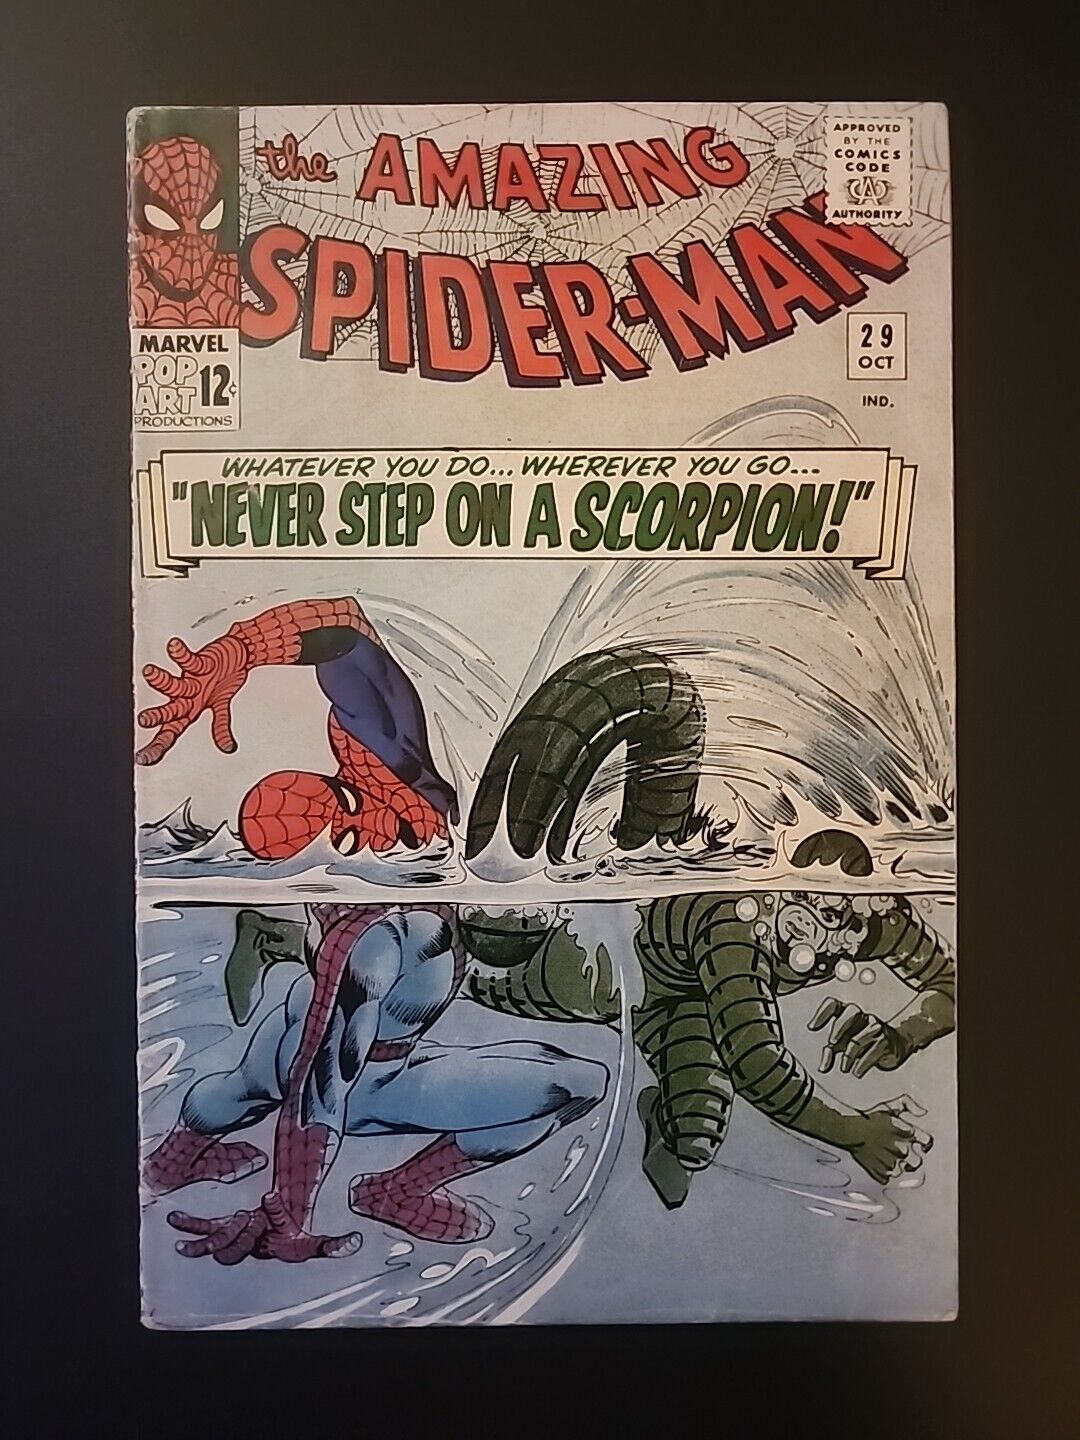 The Amazing Spider-Man #29 (1965)